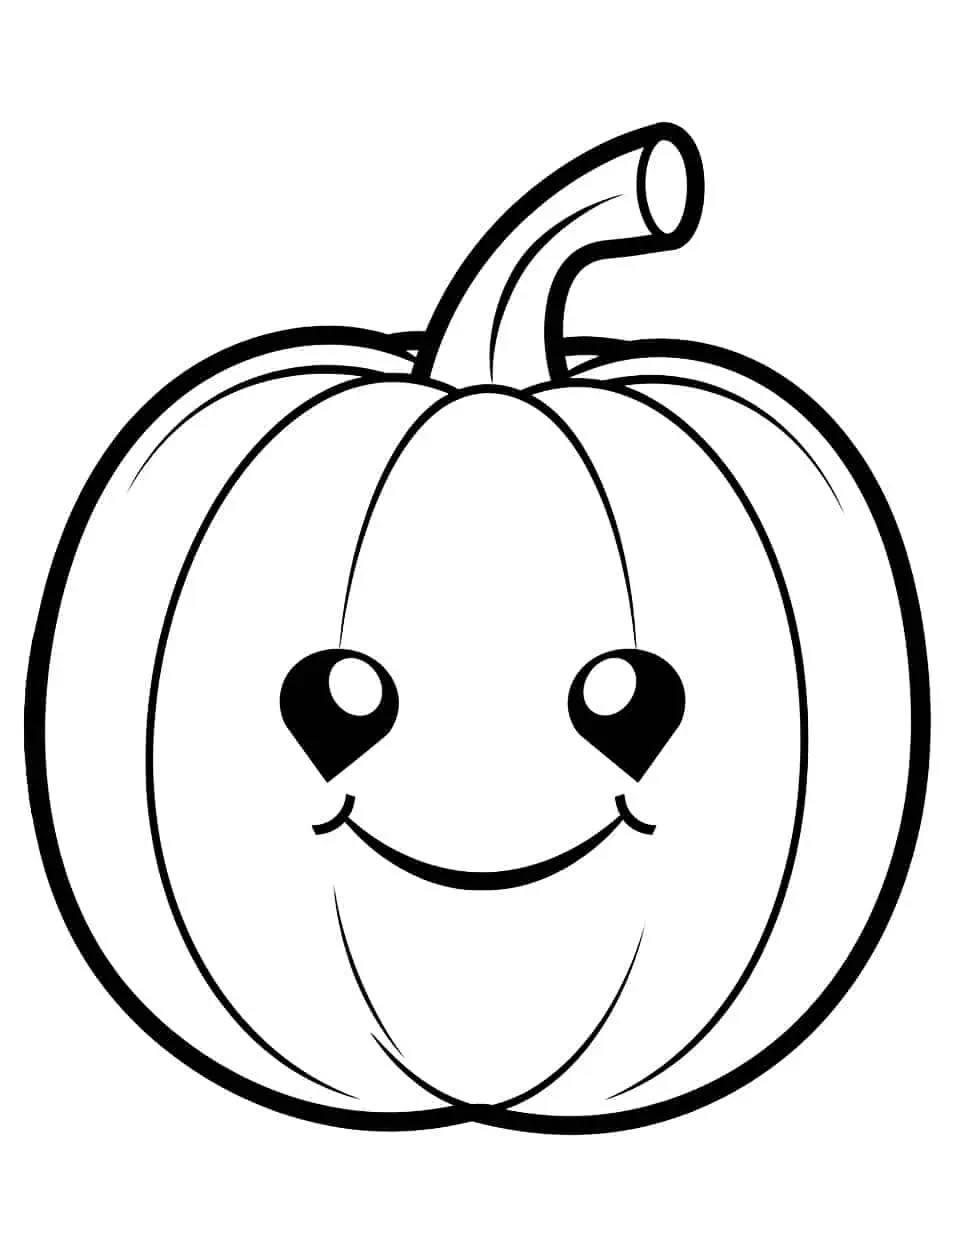 Kawaii Pumpkin Coloring Page - A kawaii-inspired pumpkin with big, adorable eyes, offering a cute twist to pumpkin coloring.